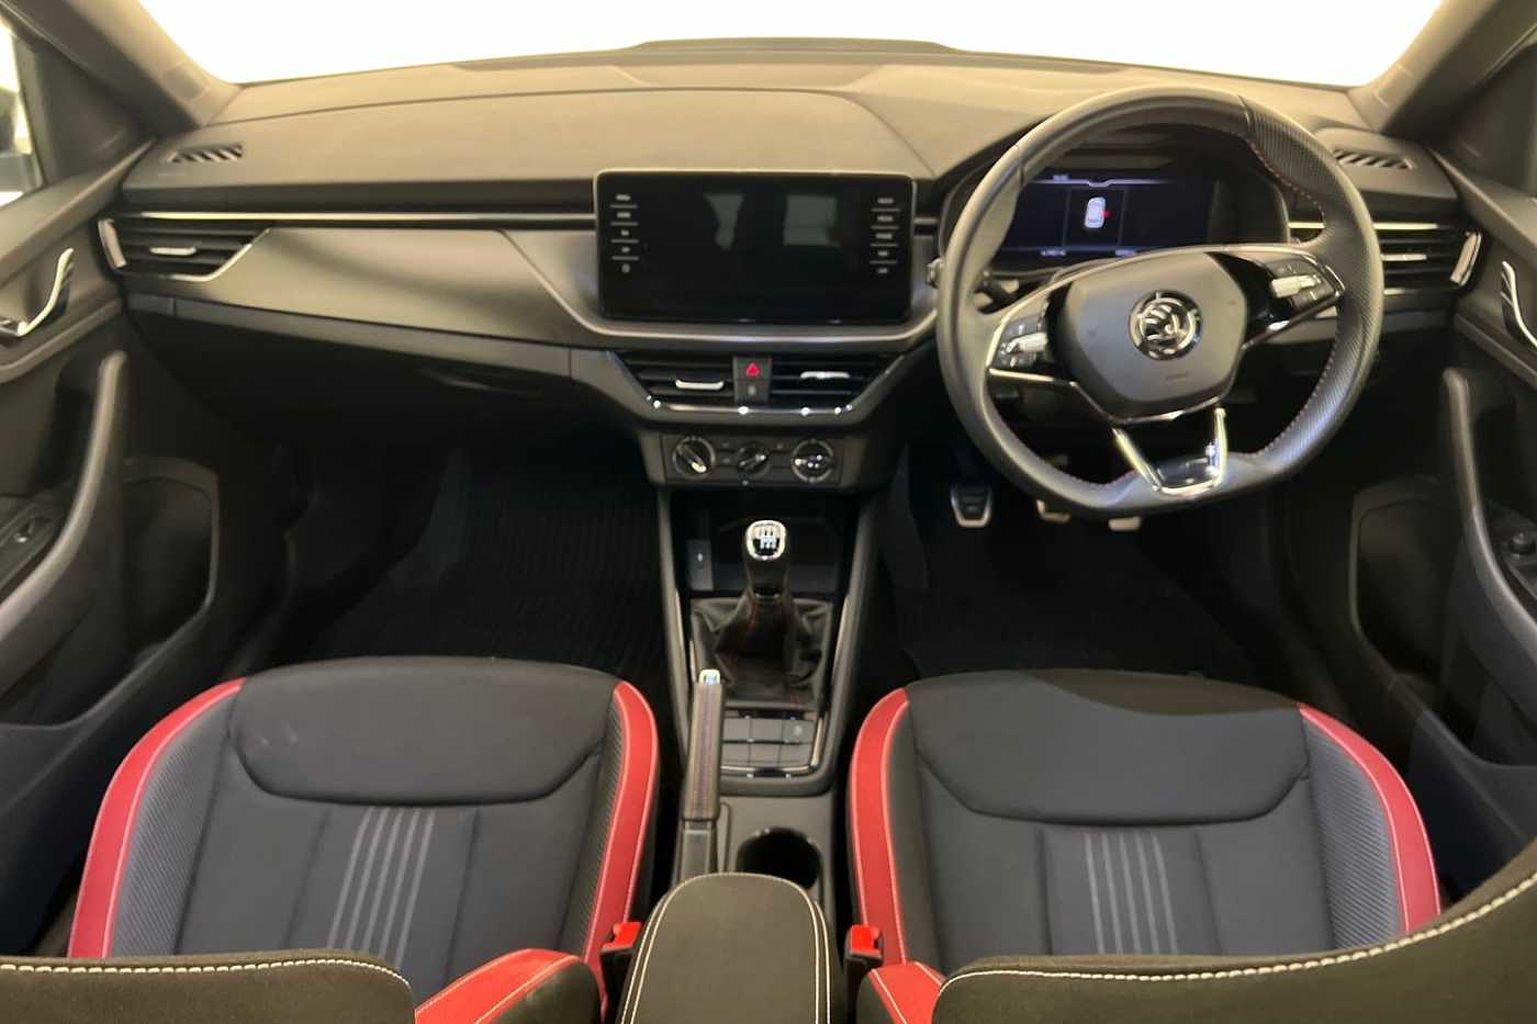 SKODA Kamiq 1.5 TSI (150ps) Monte Carlo SUV